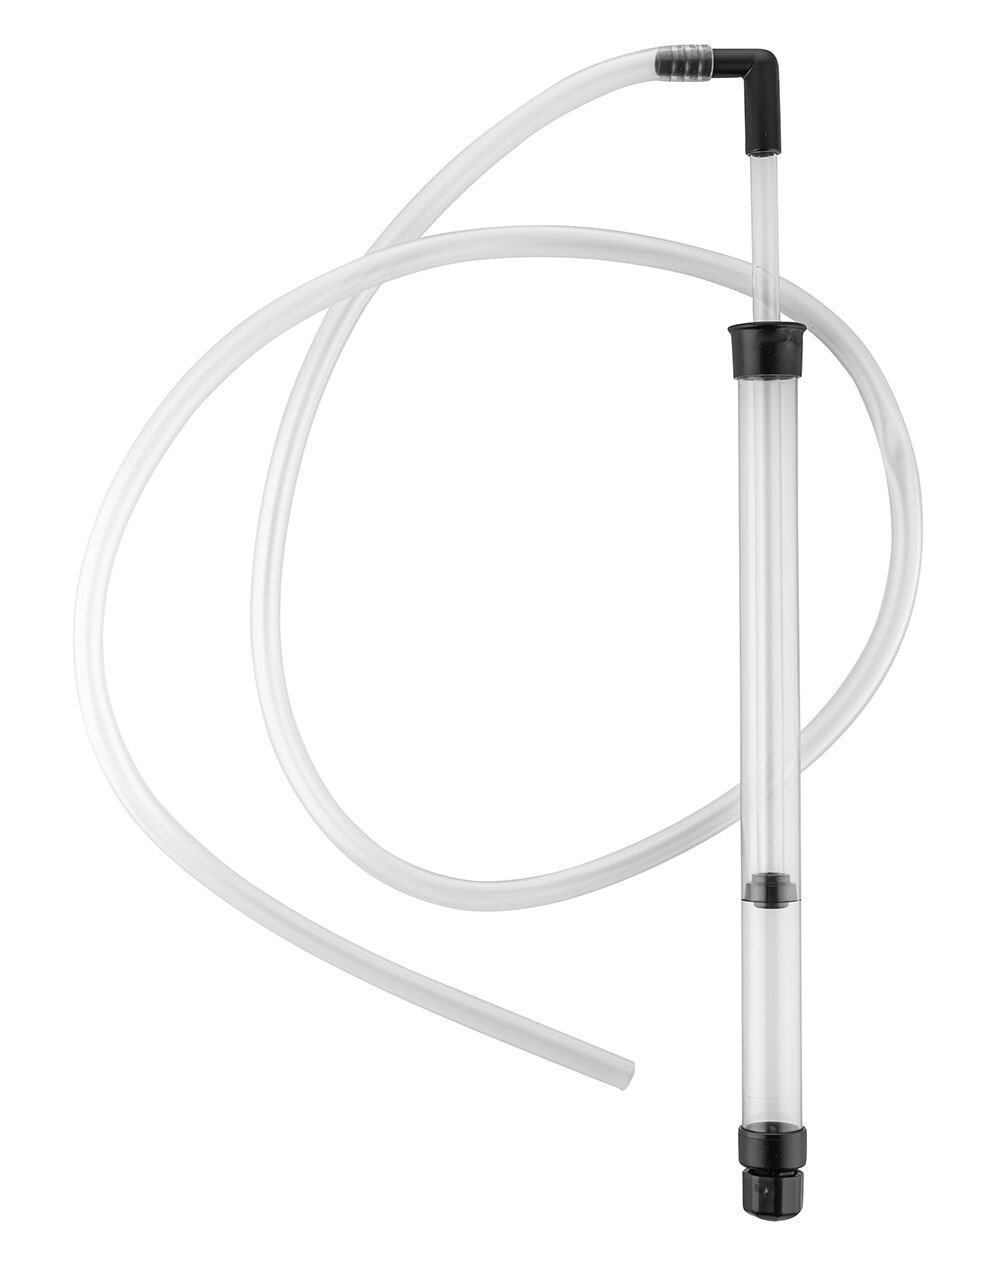 Otomatik Sifonlama (Aktarma) Çubuğu - 33 cm